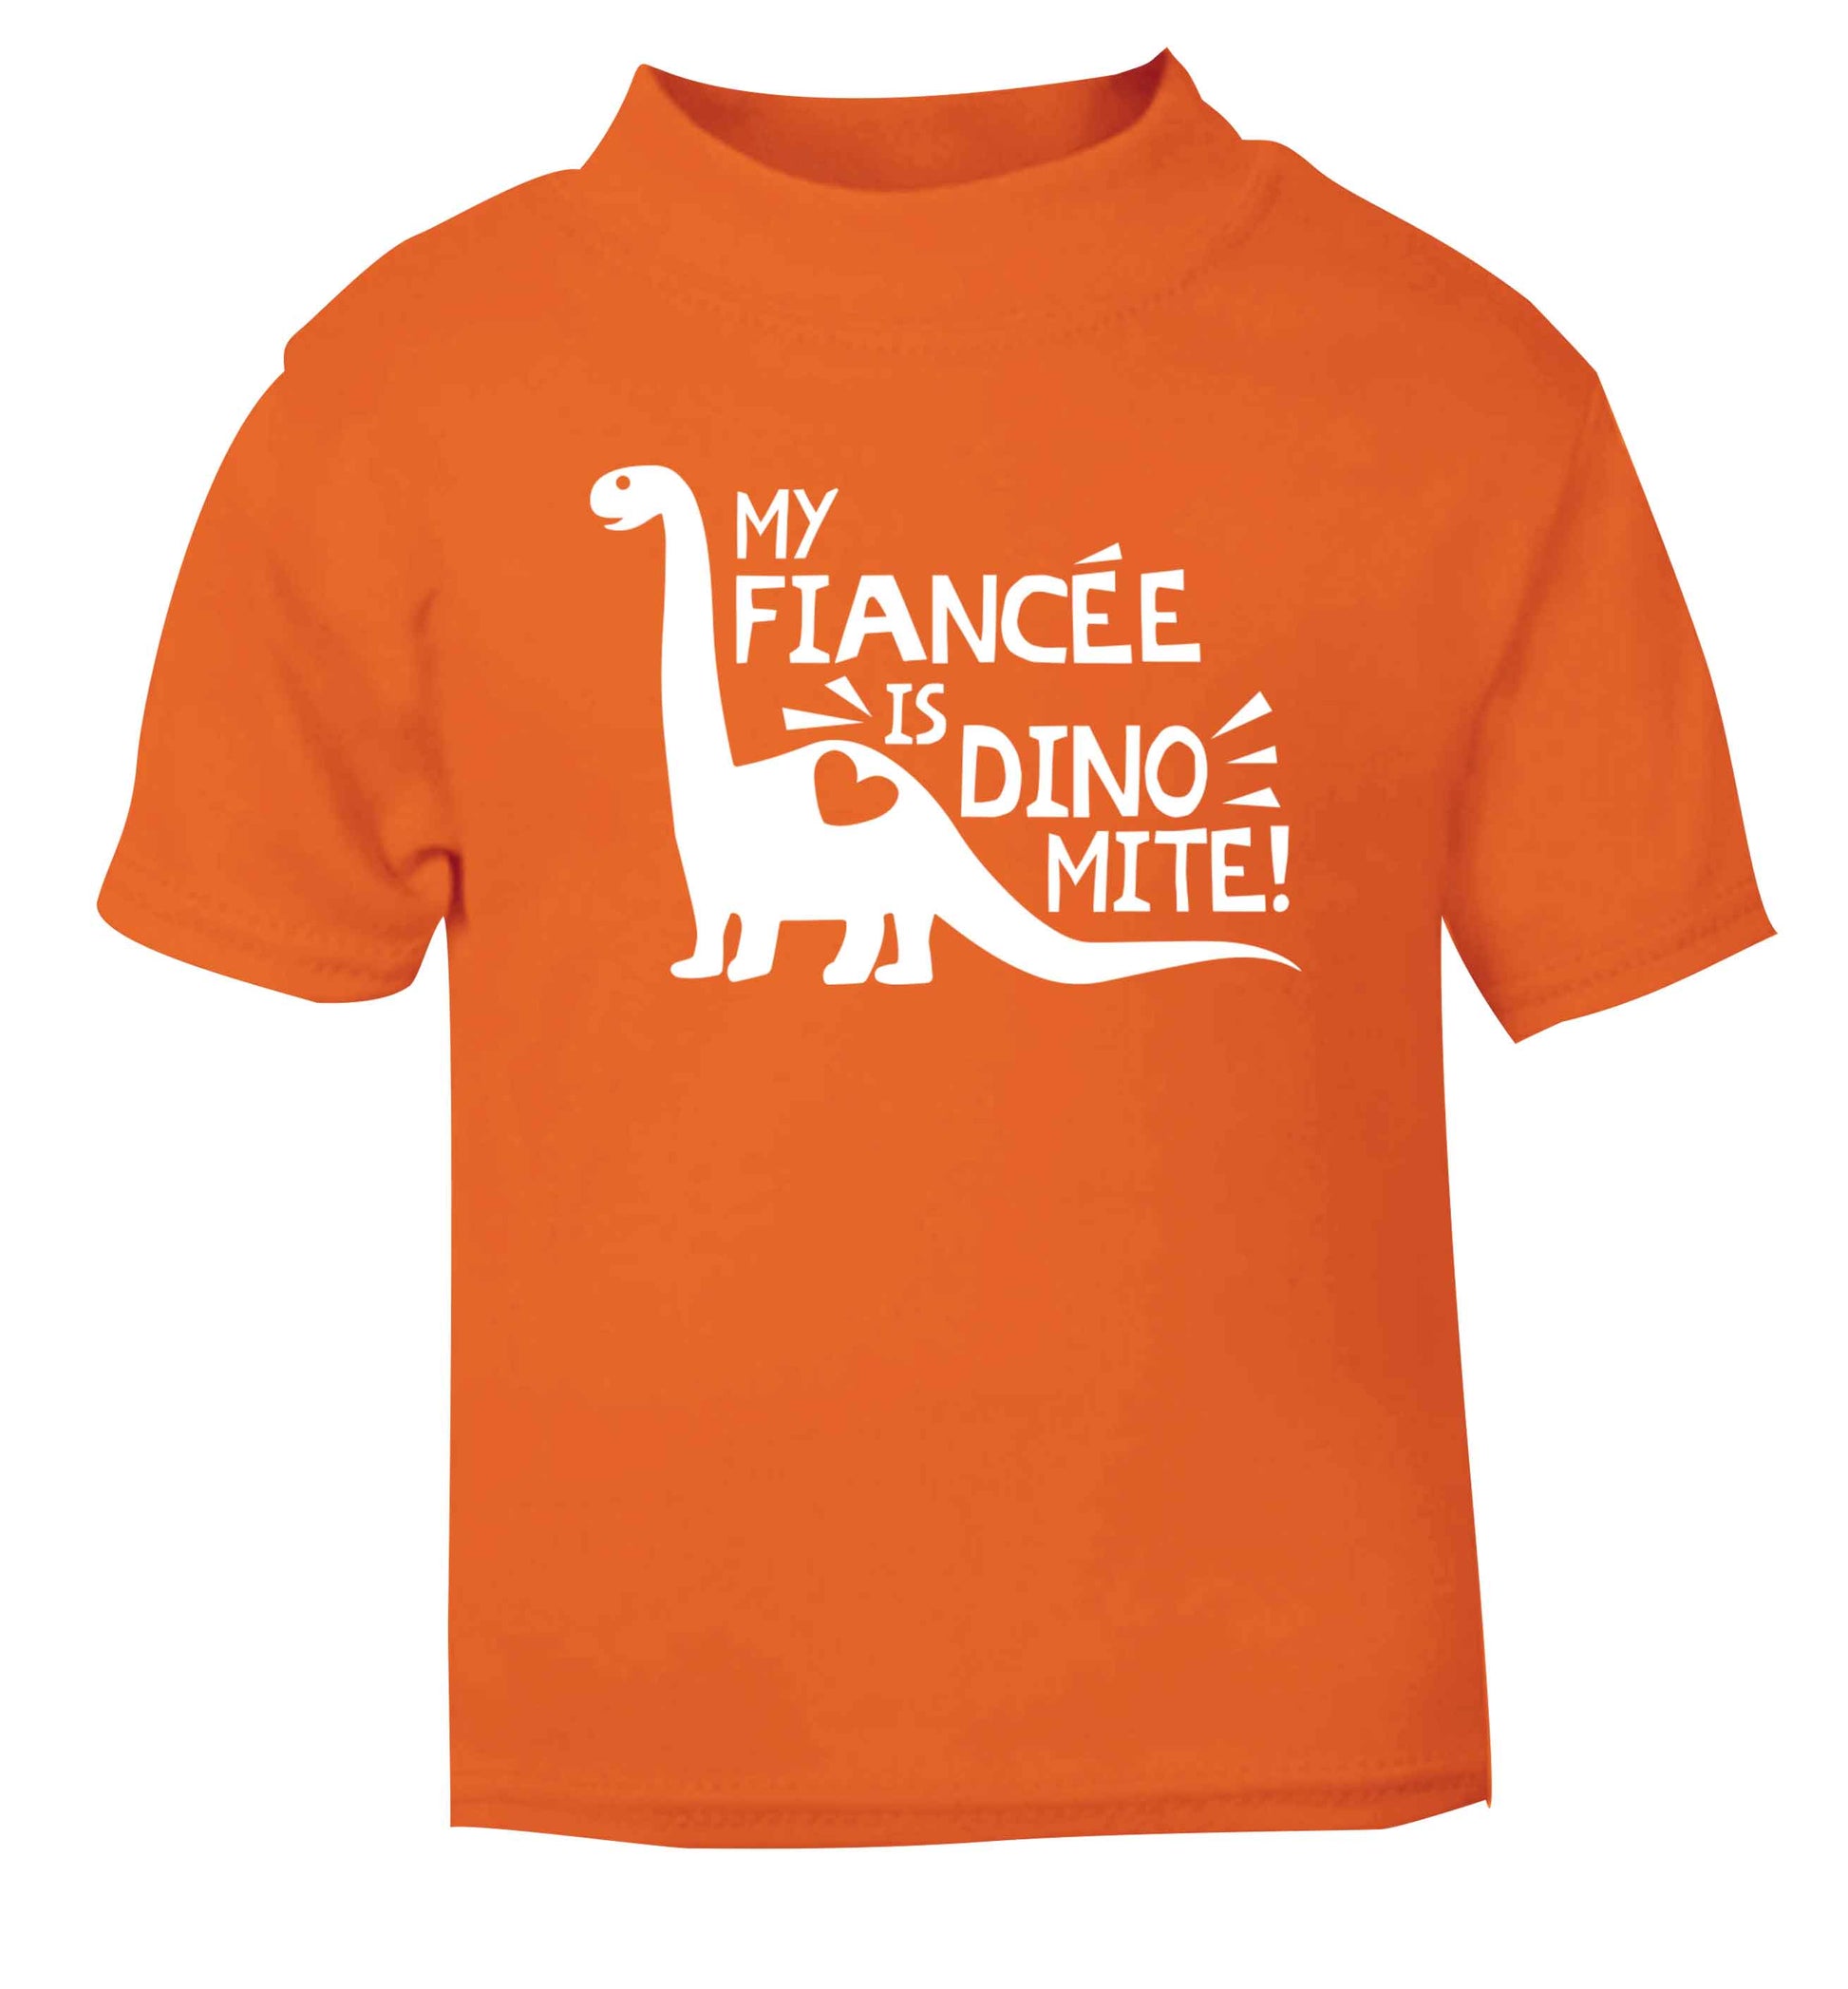 My fiancee is dinomite! orange Baby Toddler Tshirt 2 Years